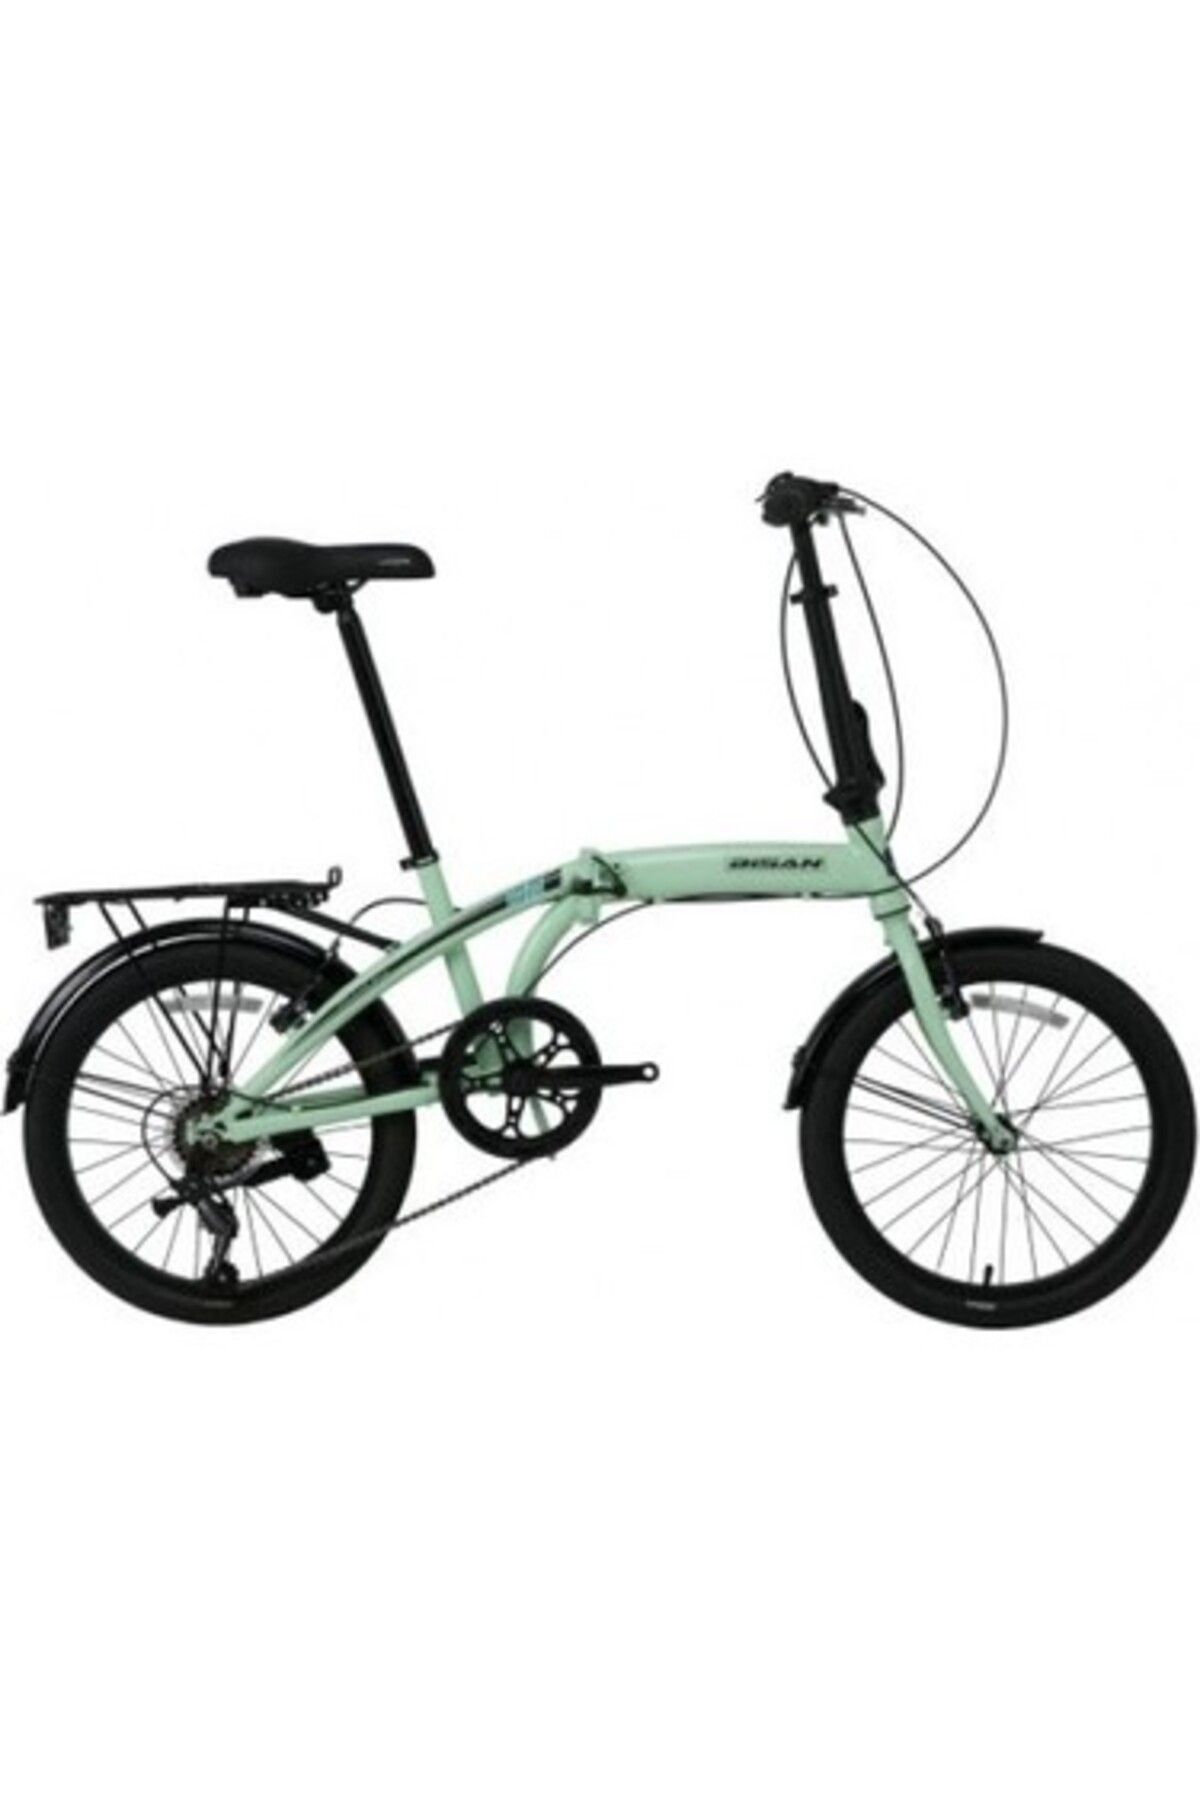 Bisan Twın-s 20 Jant Katlanır Bisiklet Kadro: 11 - 28 Cm 6 Vites Mint Yeşil -siyah-22